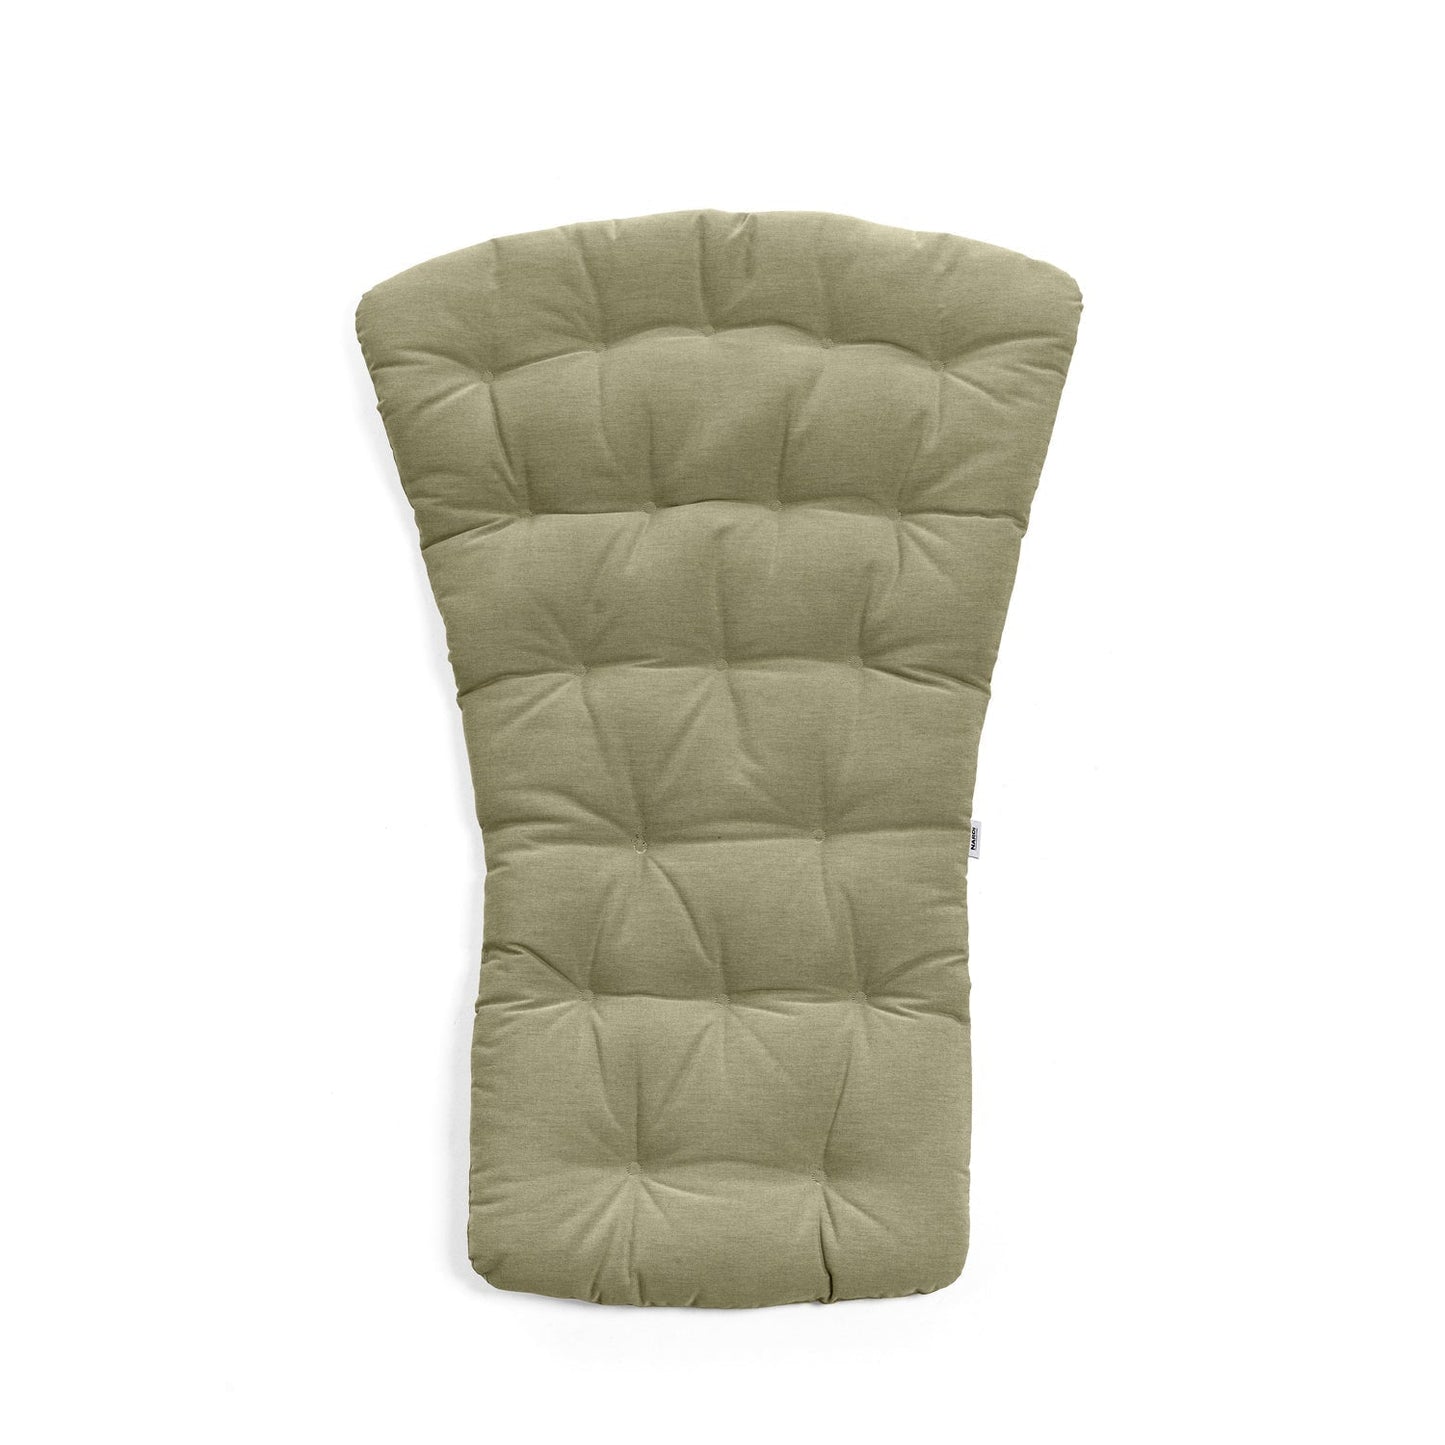 Folio Comfort Cushion In Sage Green